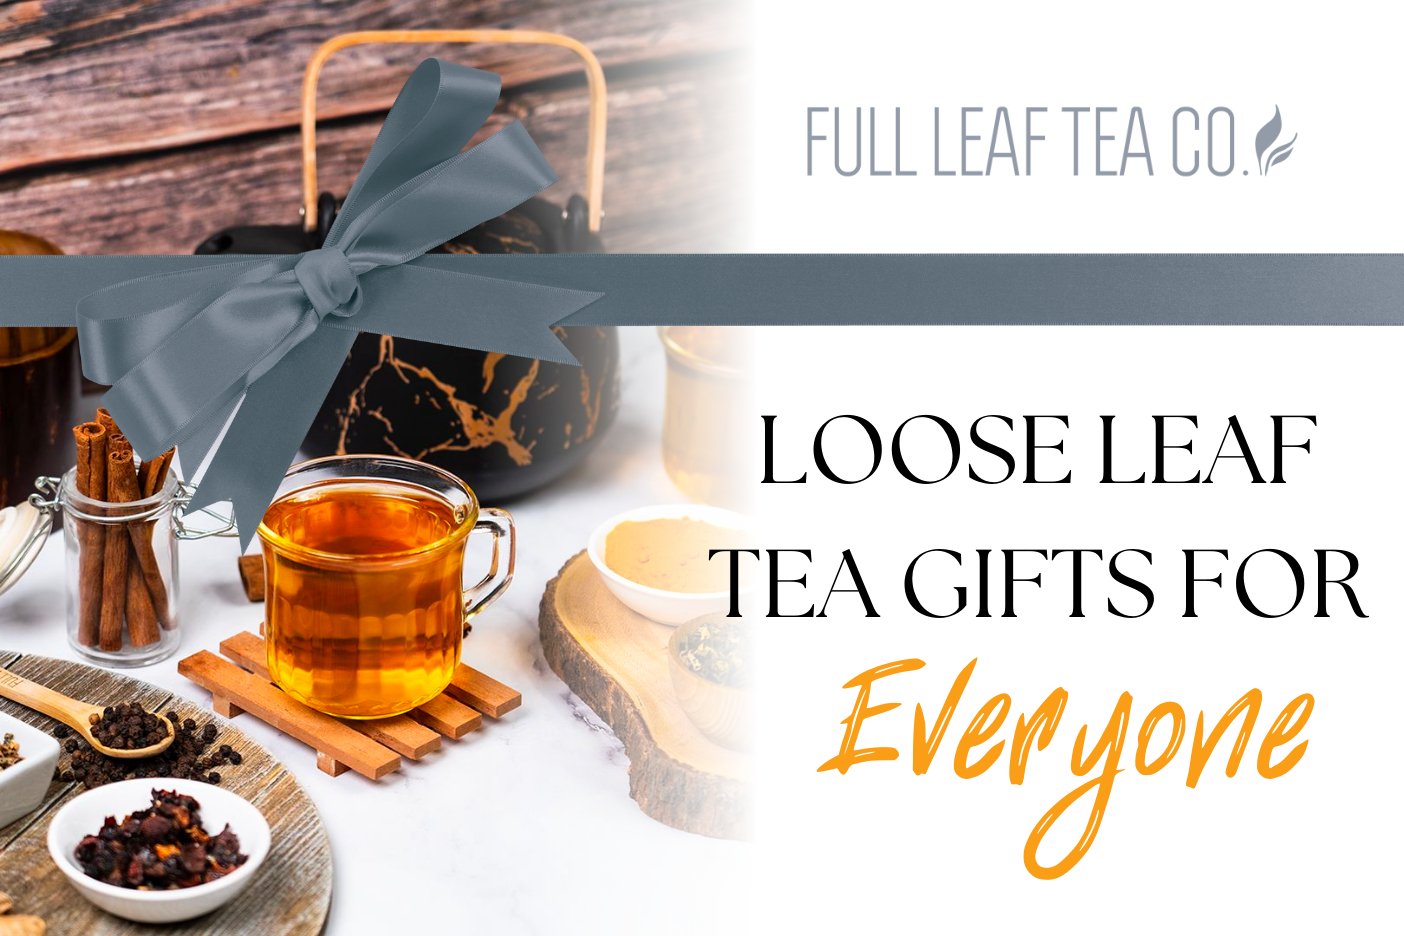 Loose Leaf Tea Gifts for Everyone - Full Leaf Tea Company